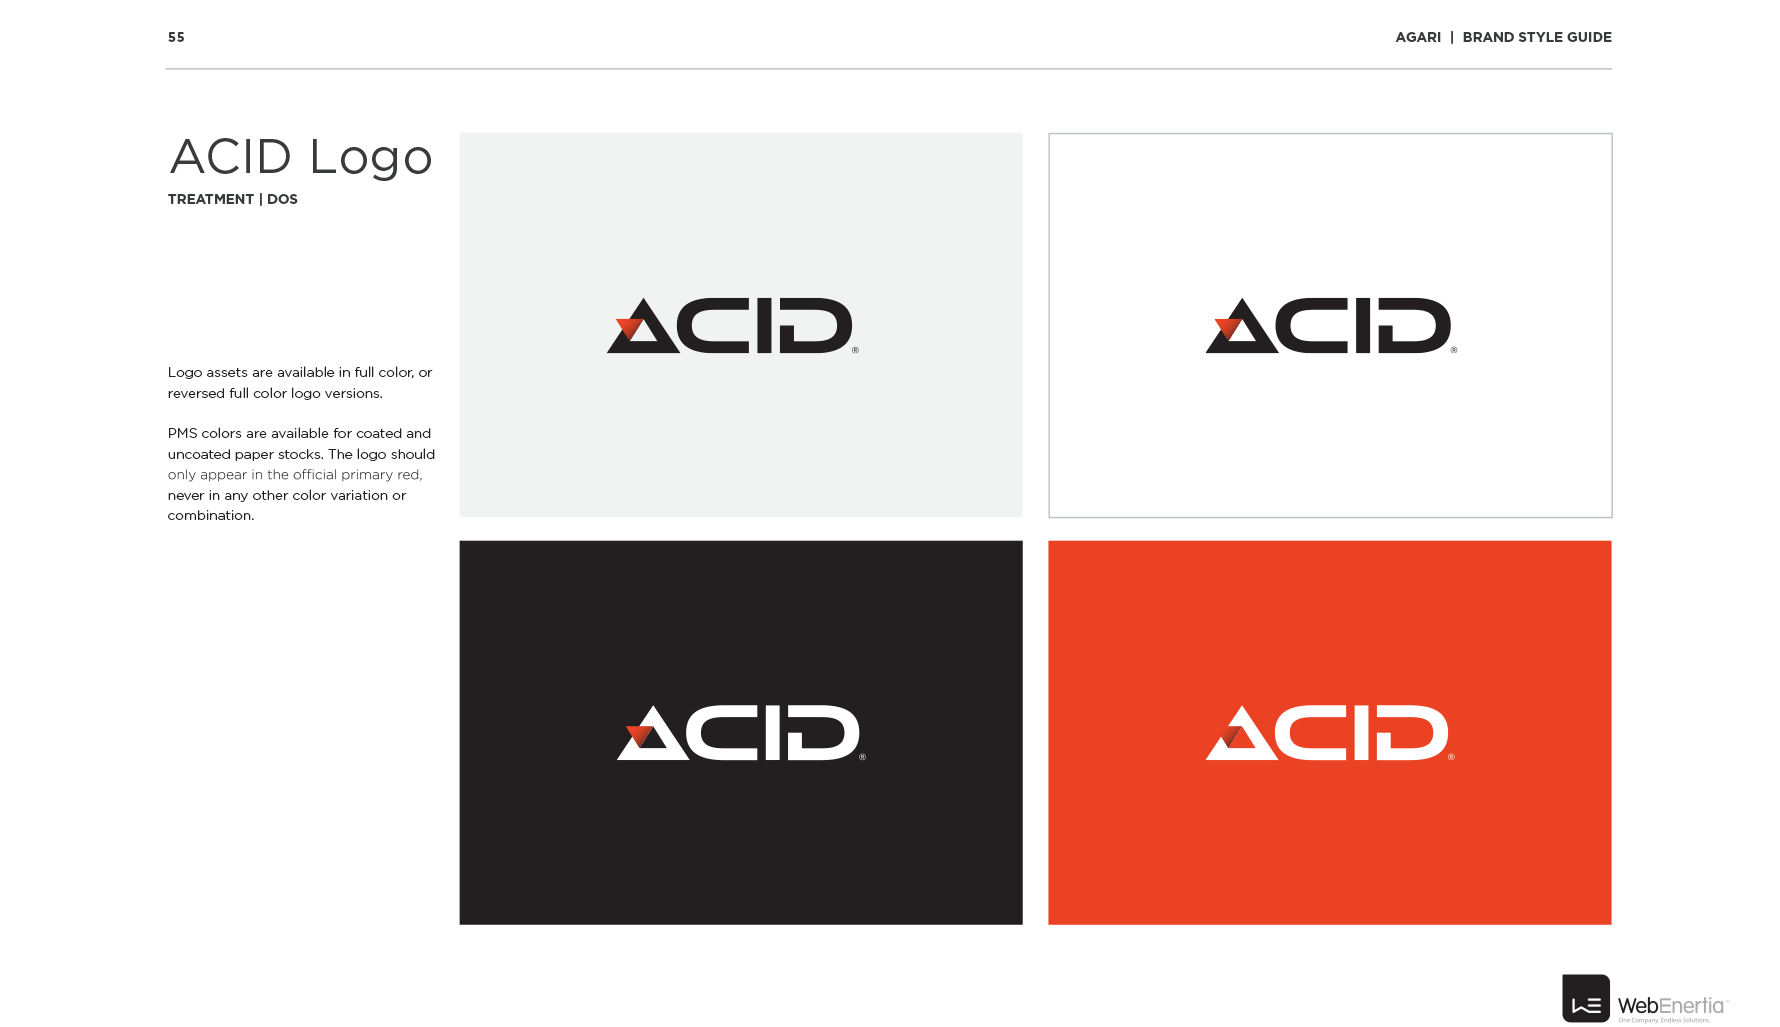 ACID Agari logo treatment specs